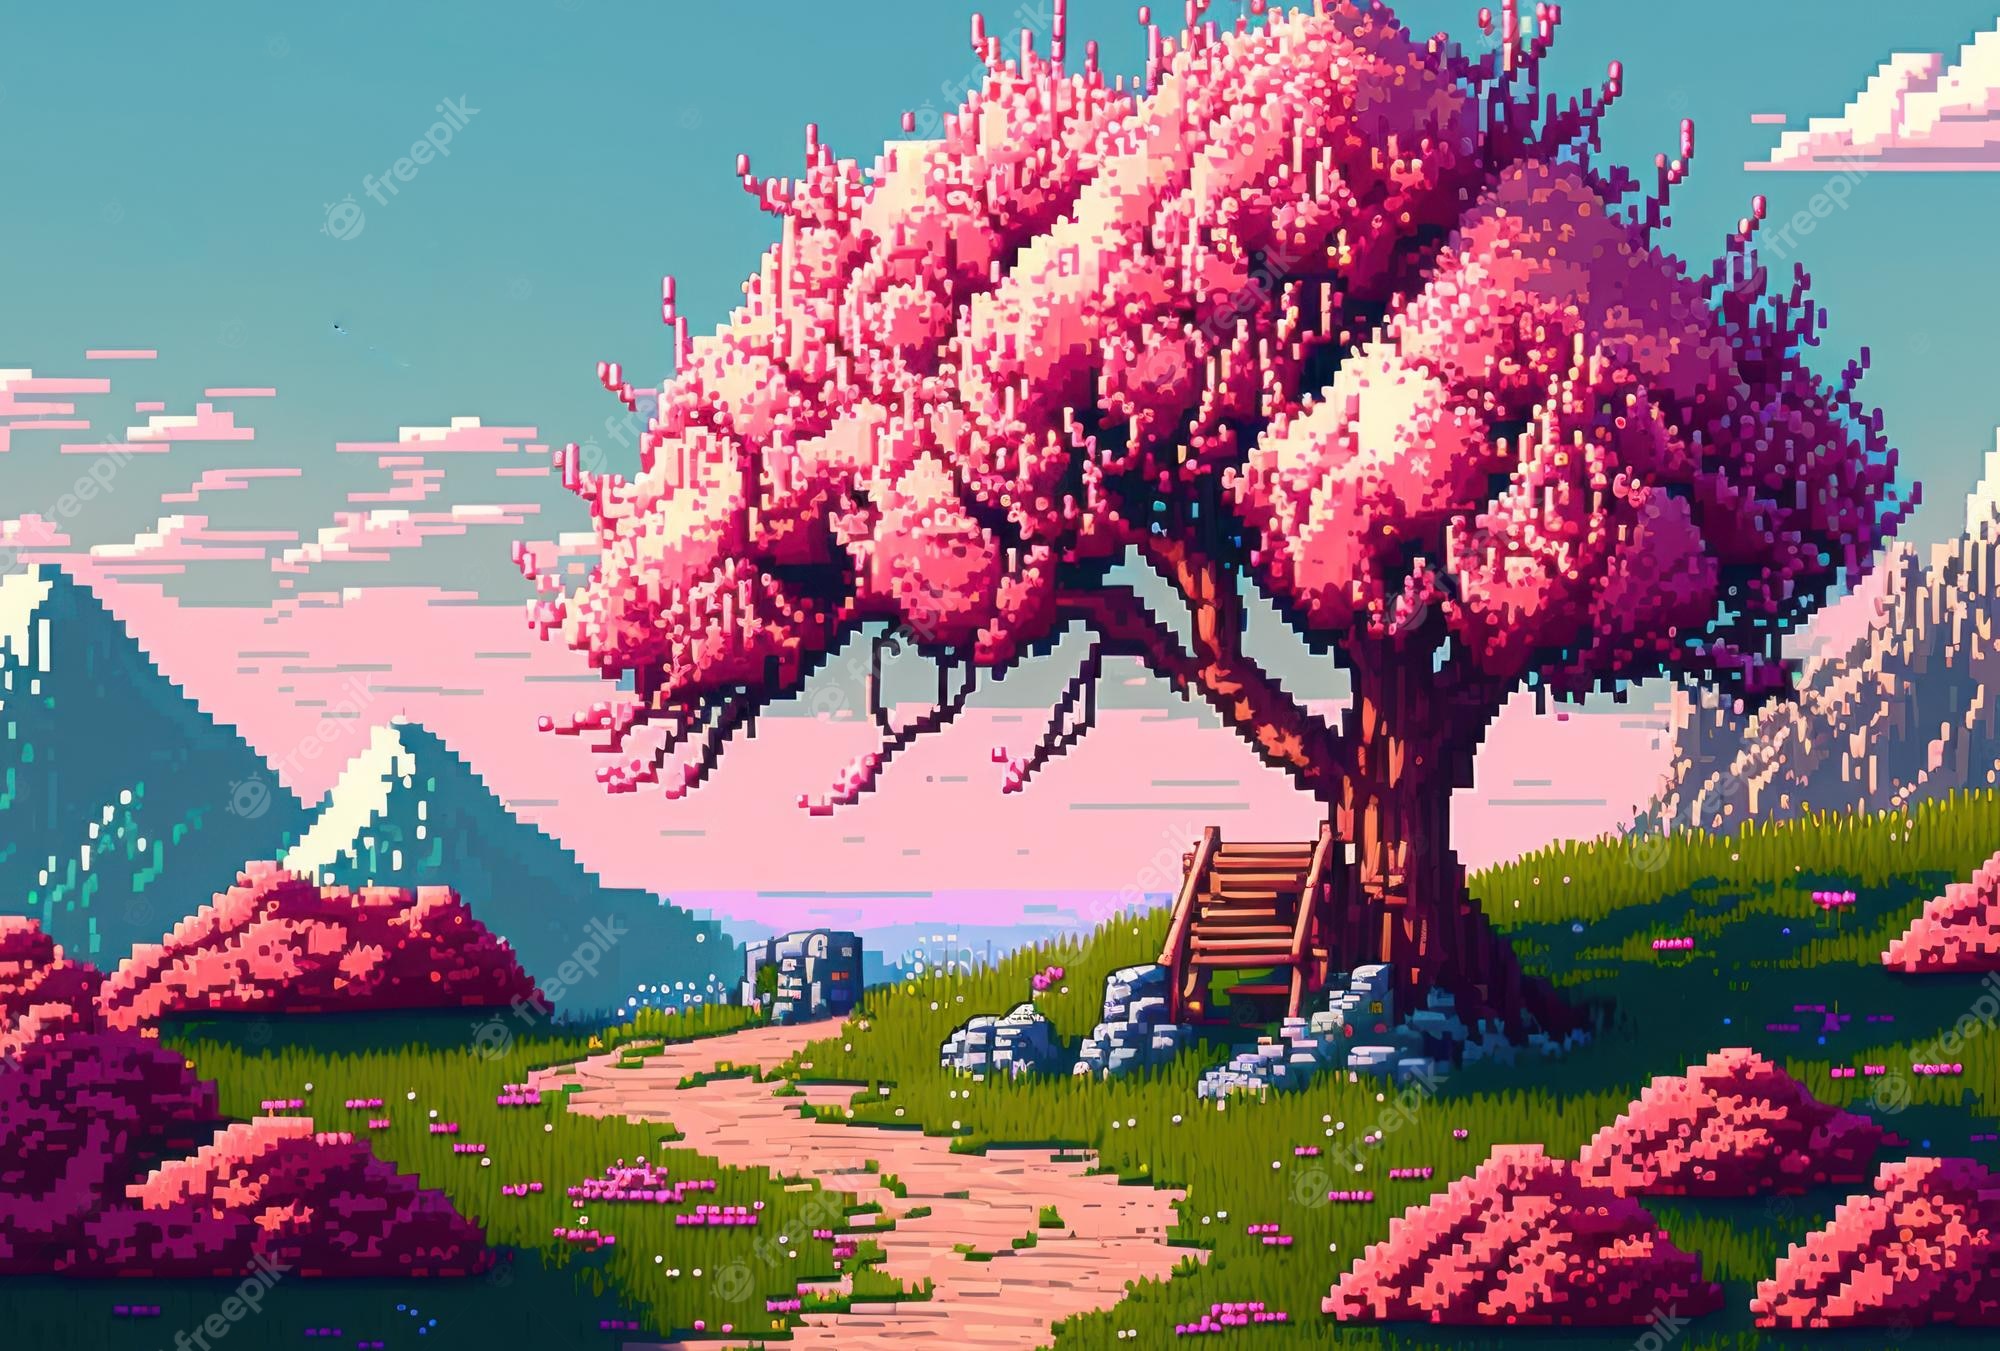 Pixel art landscape with a pink tree - Pixel art